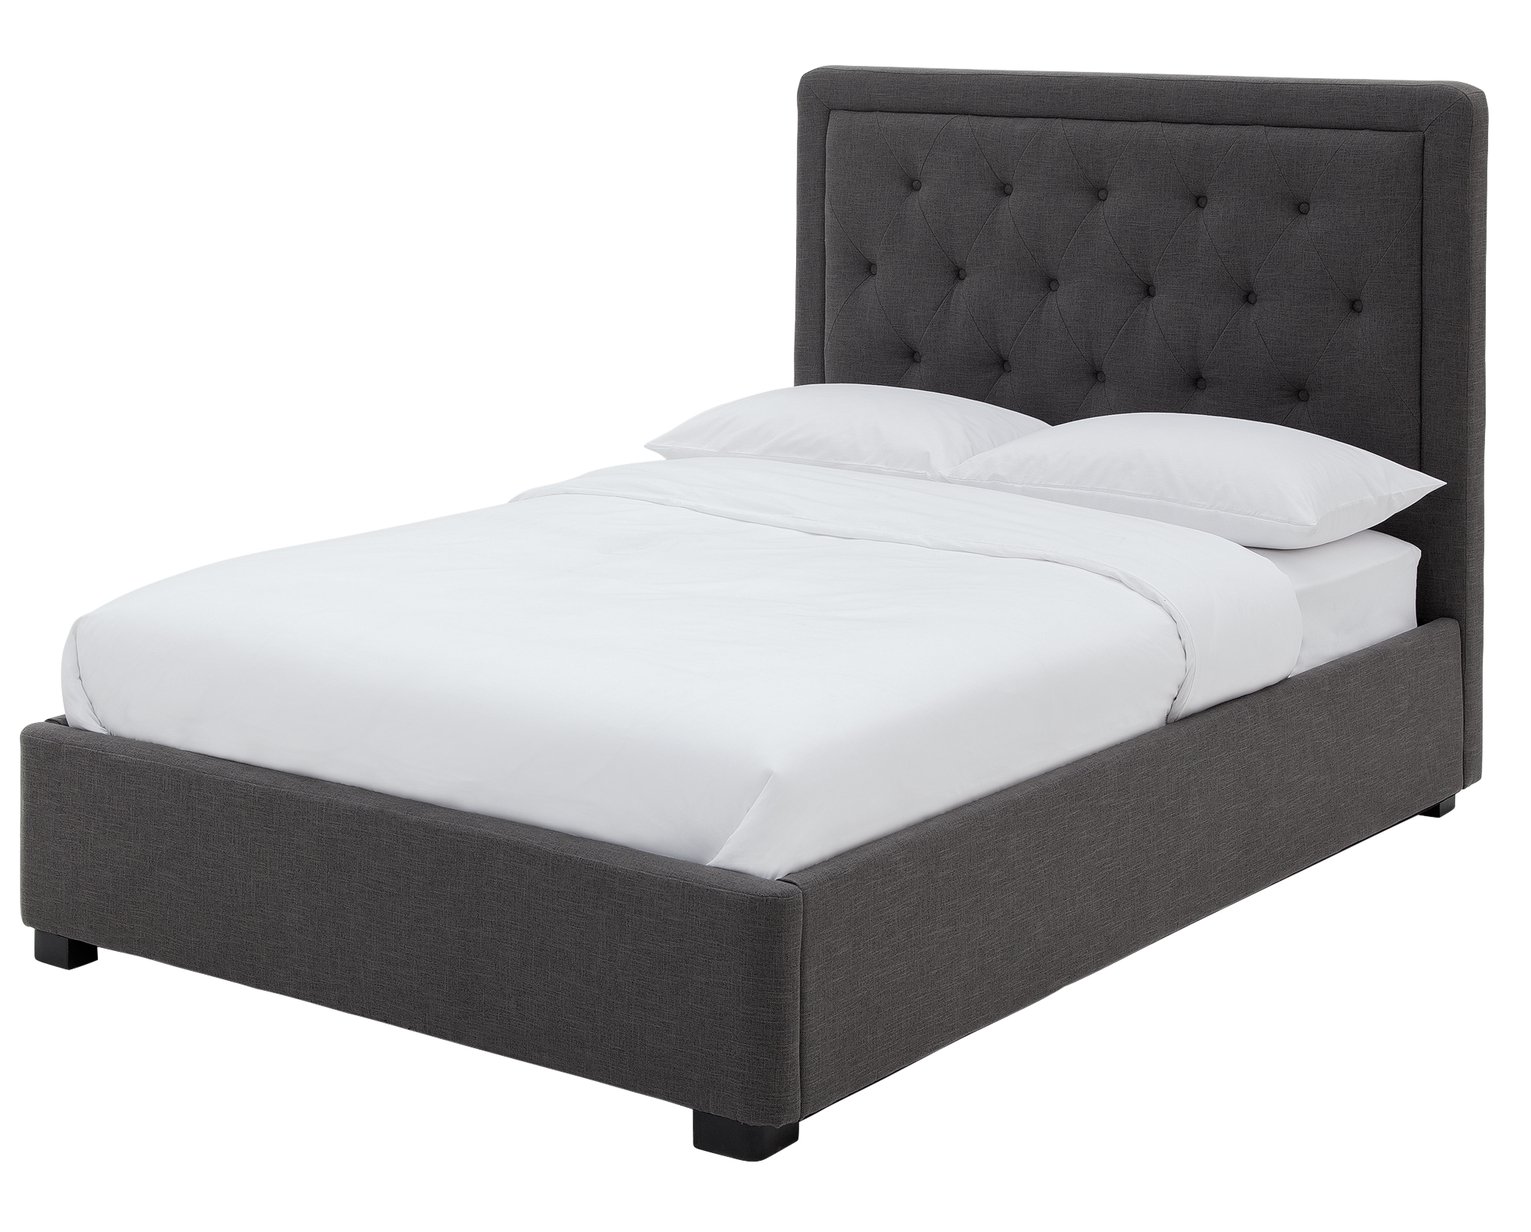 Argos Home Appleby Kingsize Ottoman Bed Frame Review